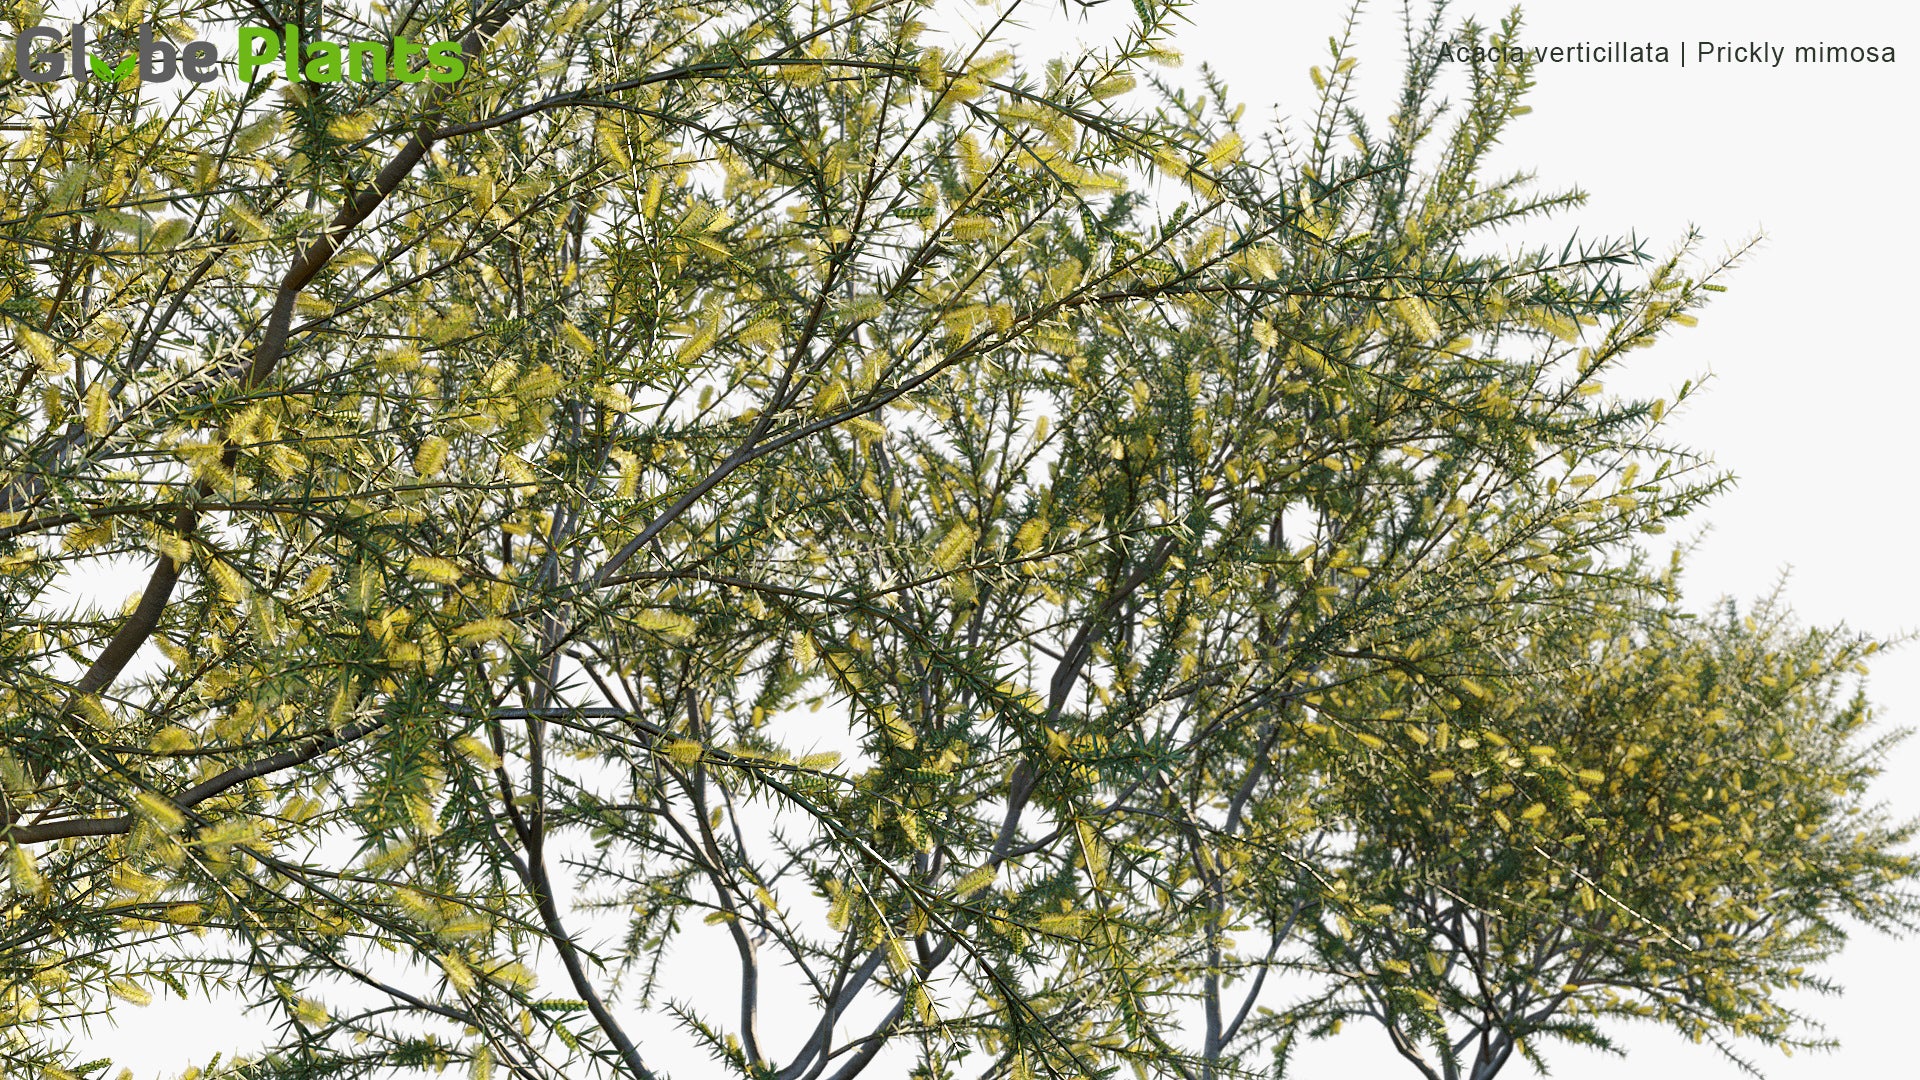 Acacia Verticillata - Prickly Moses, Prickly-Leaved Wattle, Star-Leaved Acacia, Prickly Mimosa, Whorl-Leaved Acacia